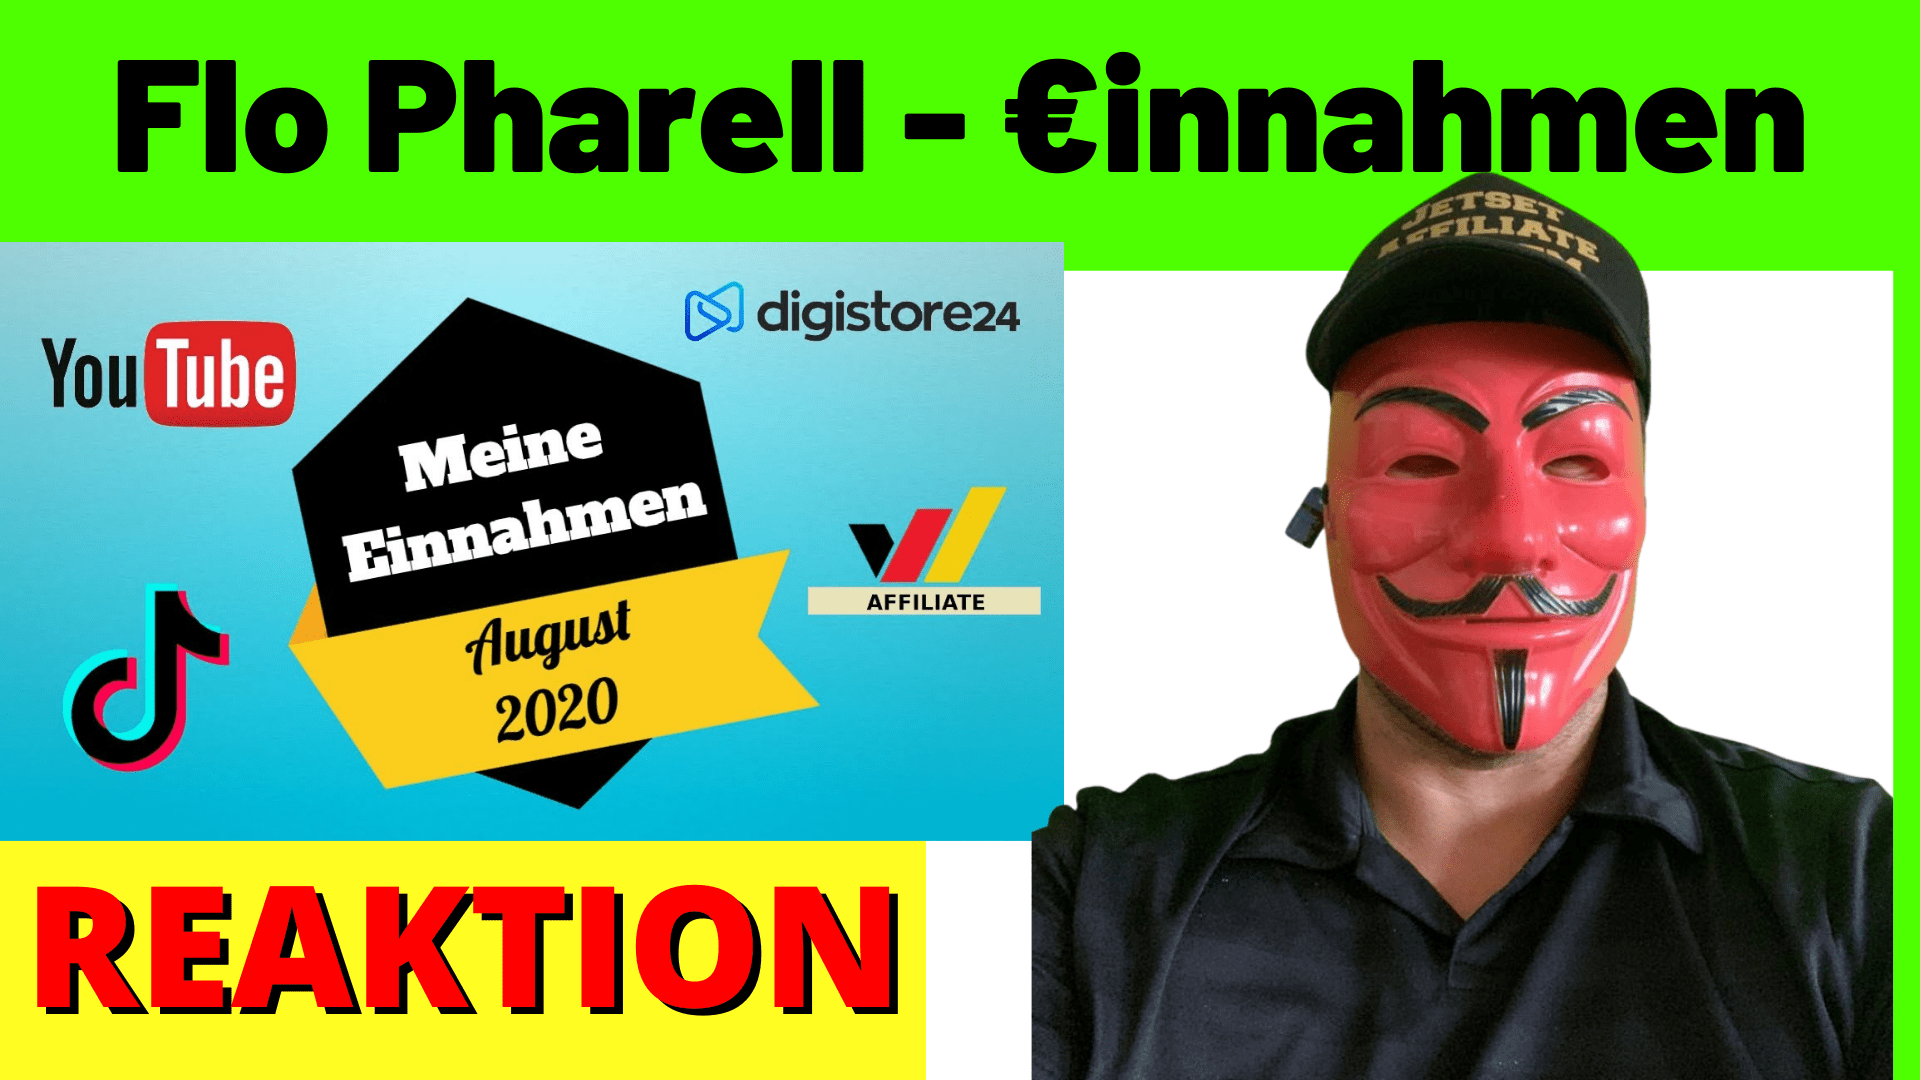 Flo Pharell August 2020 Einnahmen - Digistore24, Affiliate Marketing, YouTube